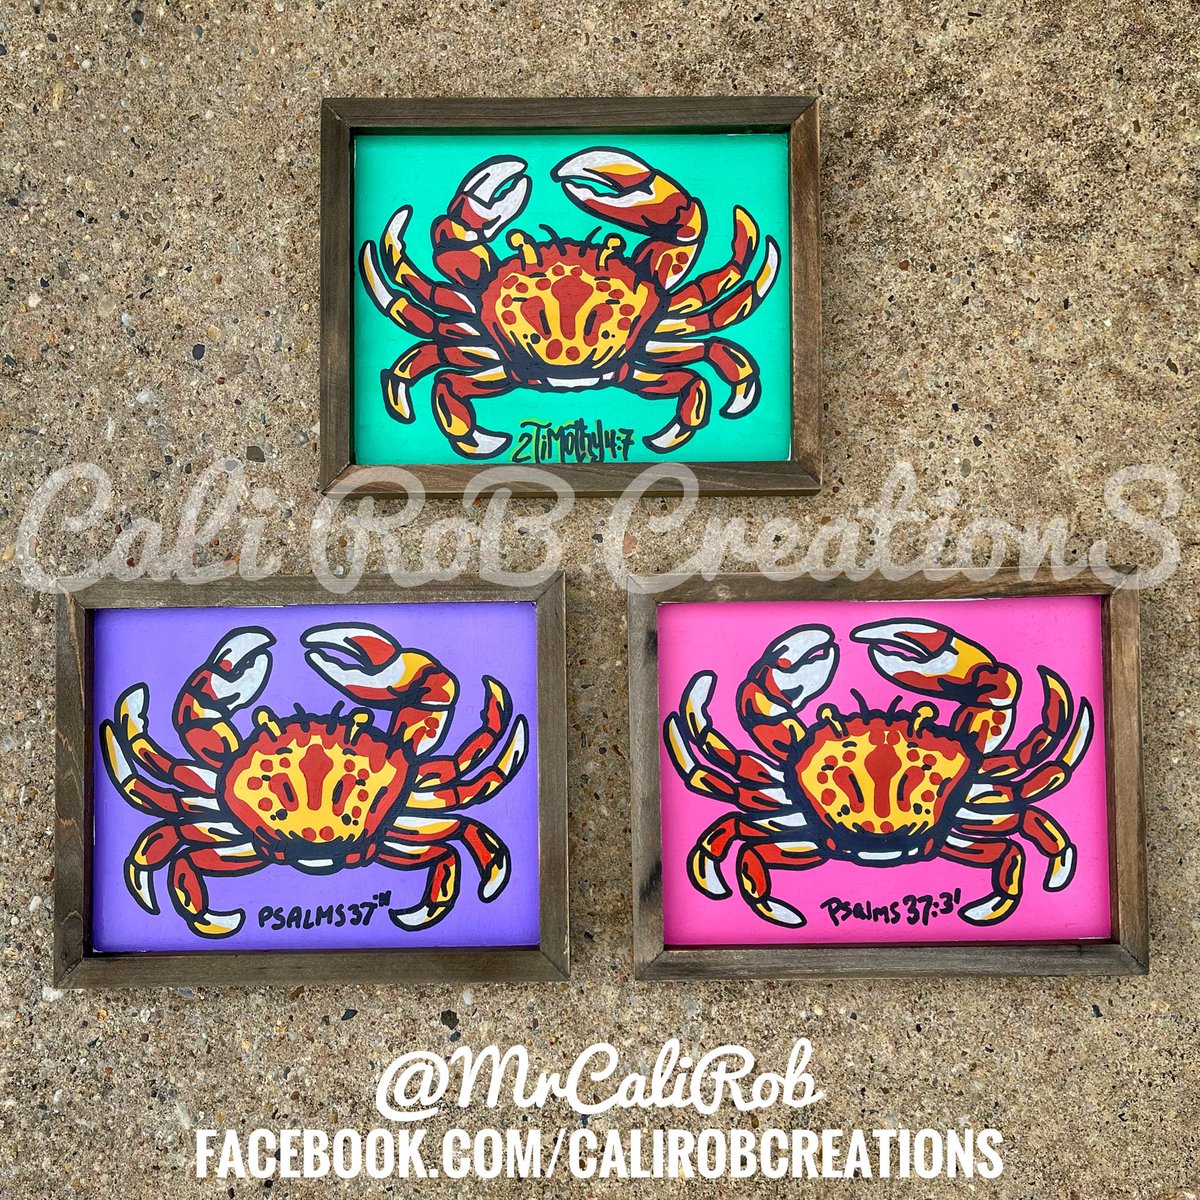 The crab trio is complete! 🦀
•
#CaliRobCreations #MsGulfCoast #GulfCoast #CoastLife #CoastalLiving #CoastalArt #Crab #CrabArt #Art #Artwork #Painting #ArtistToFollow #MrCaliRobHimself